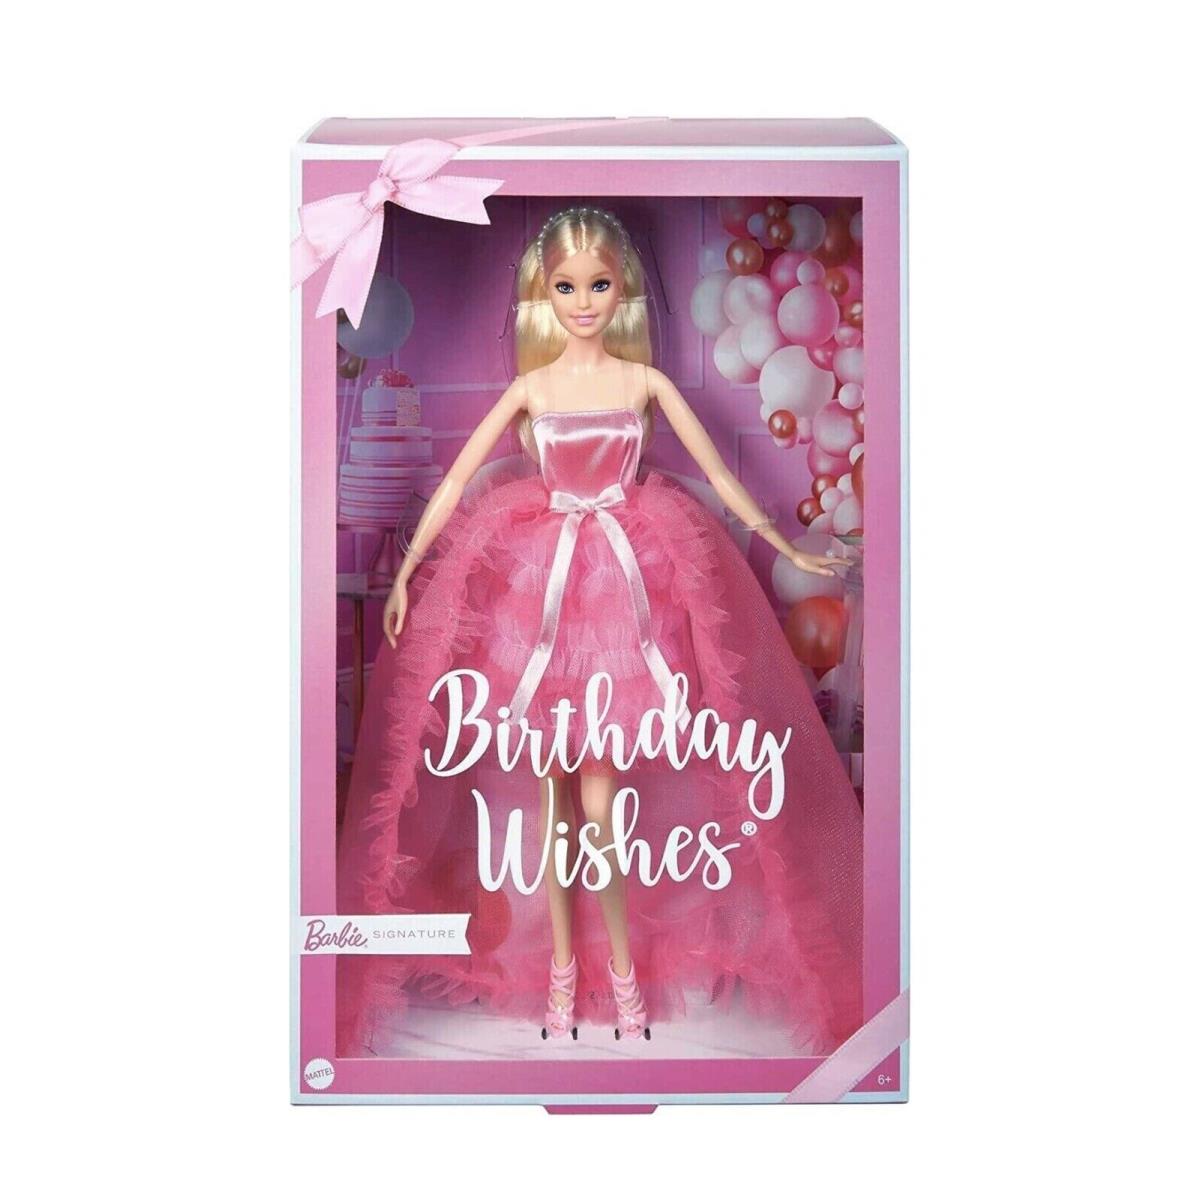 Barbie Signature Birthday Wishes Blonde Doll Ruffle Pink Dress HJX01